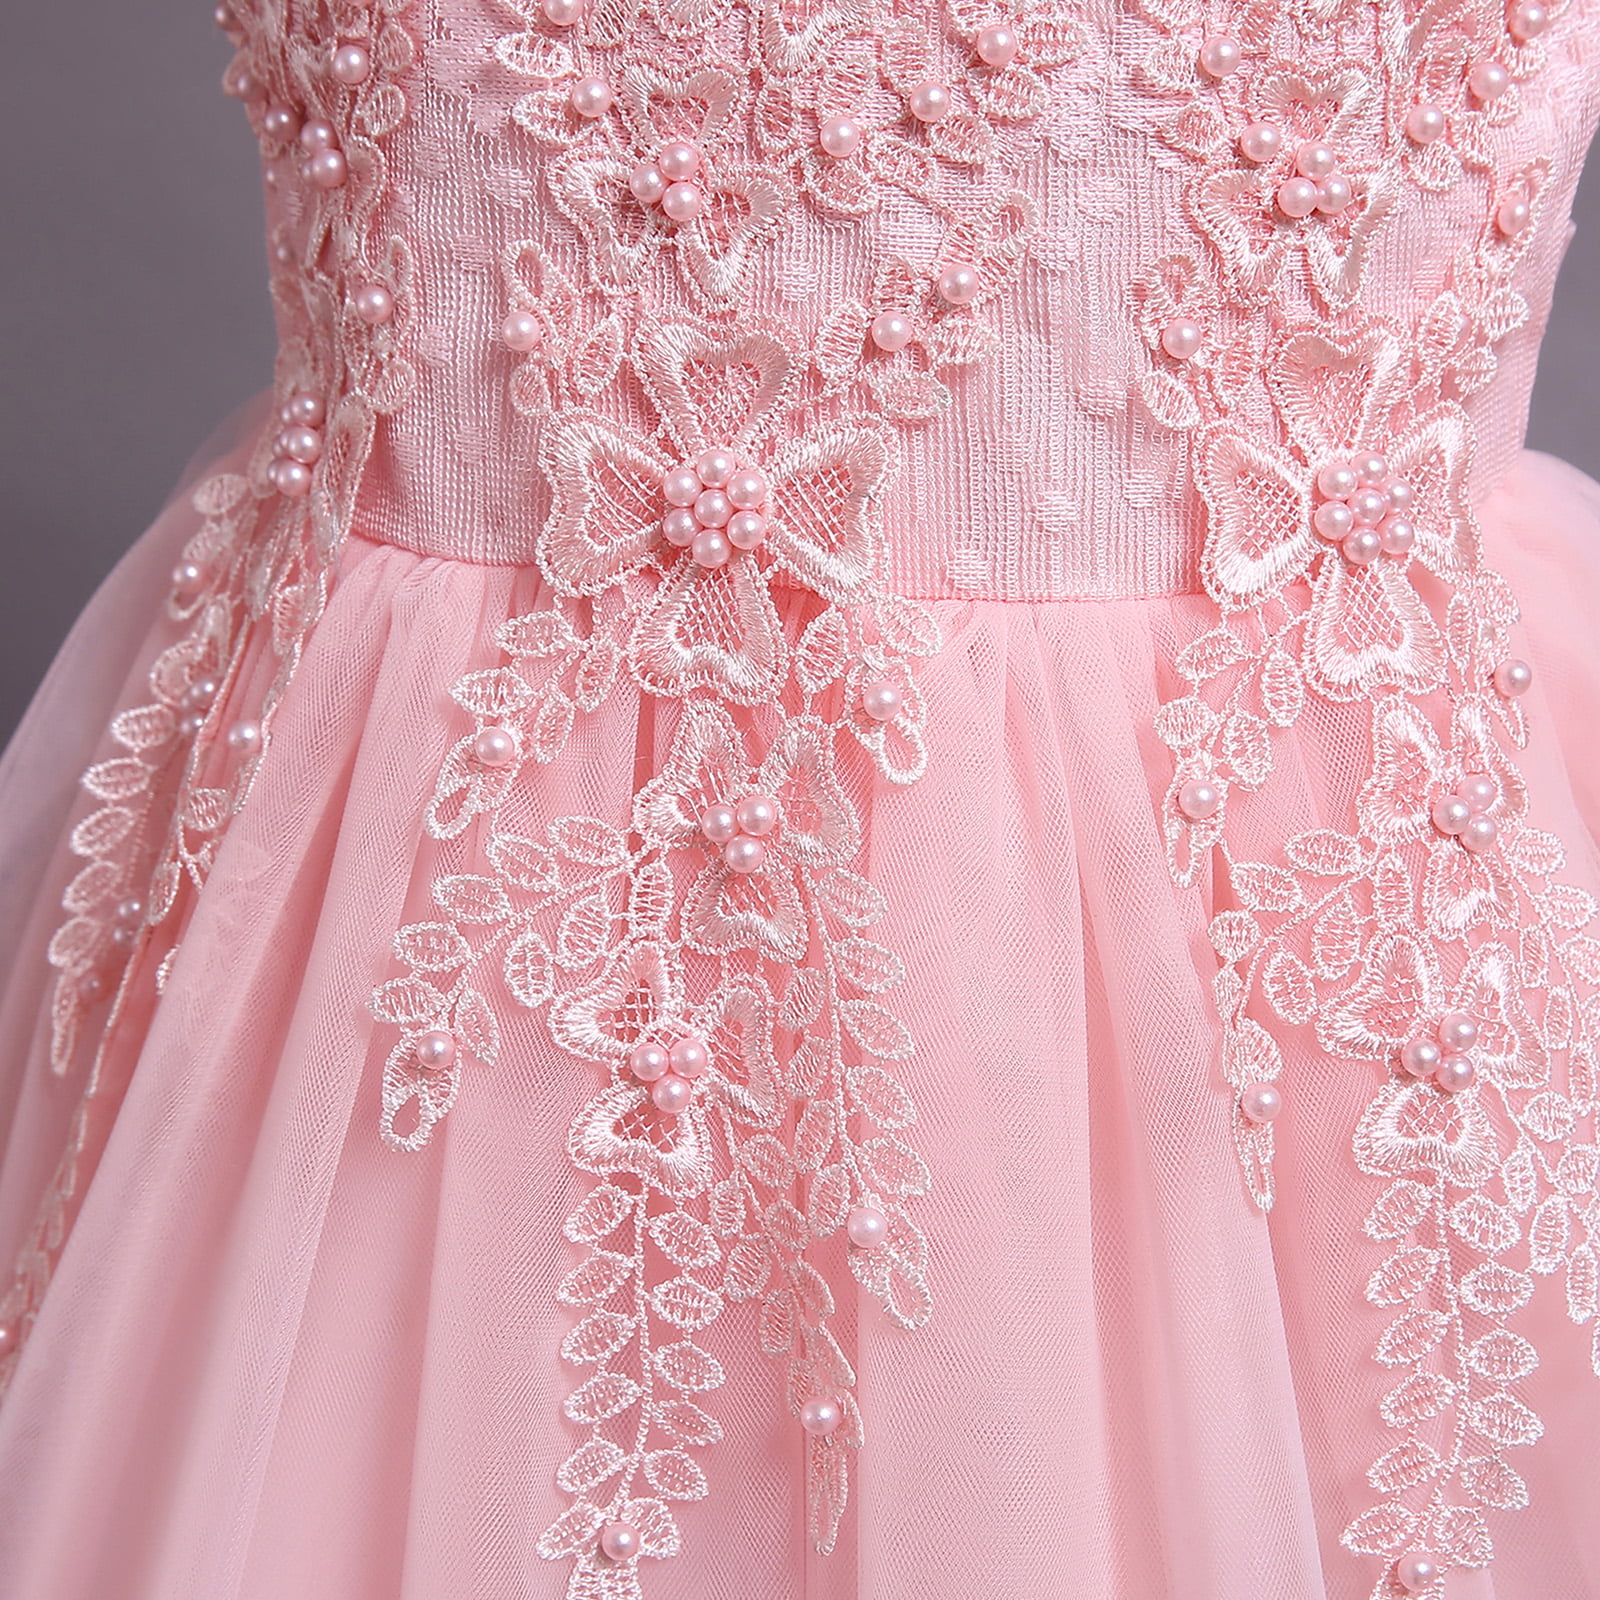 Discover 144+ light pink dress latest